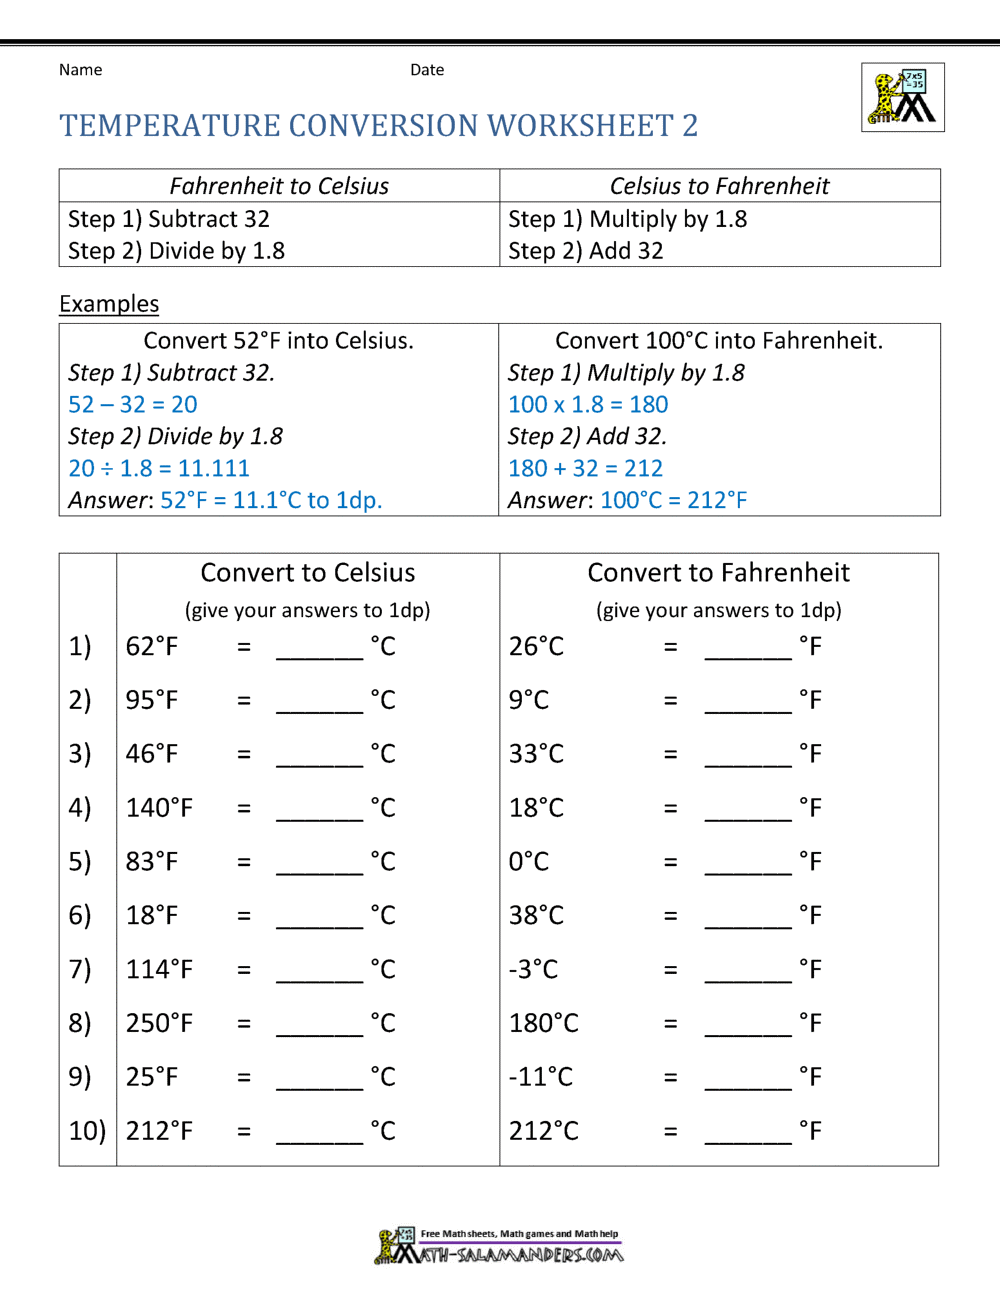 Temperature Conversion Worksheet Regarding Temperature Conversion Worksheet Answers